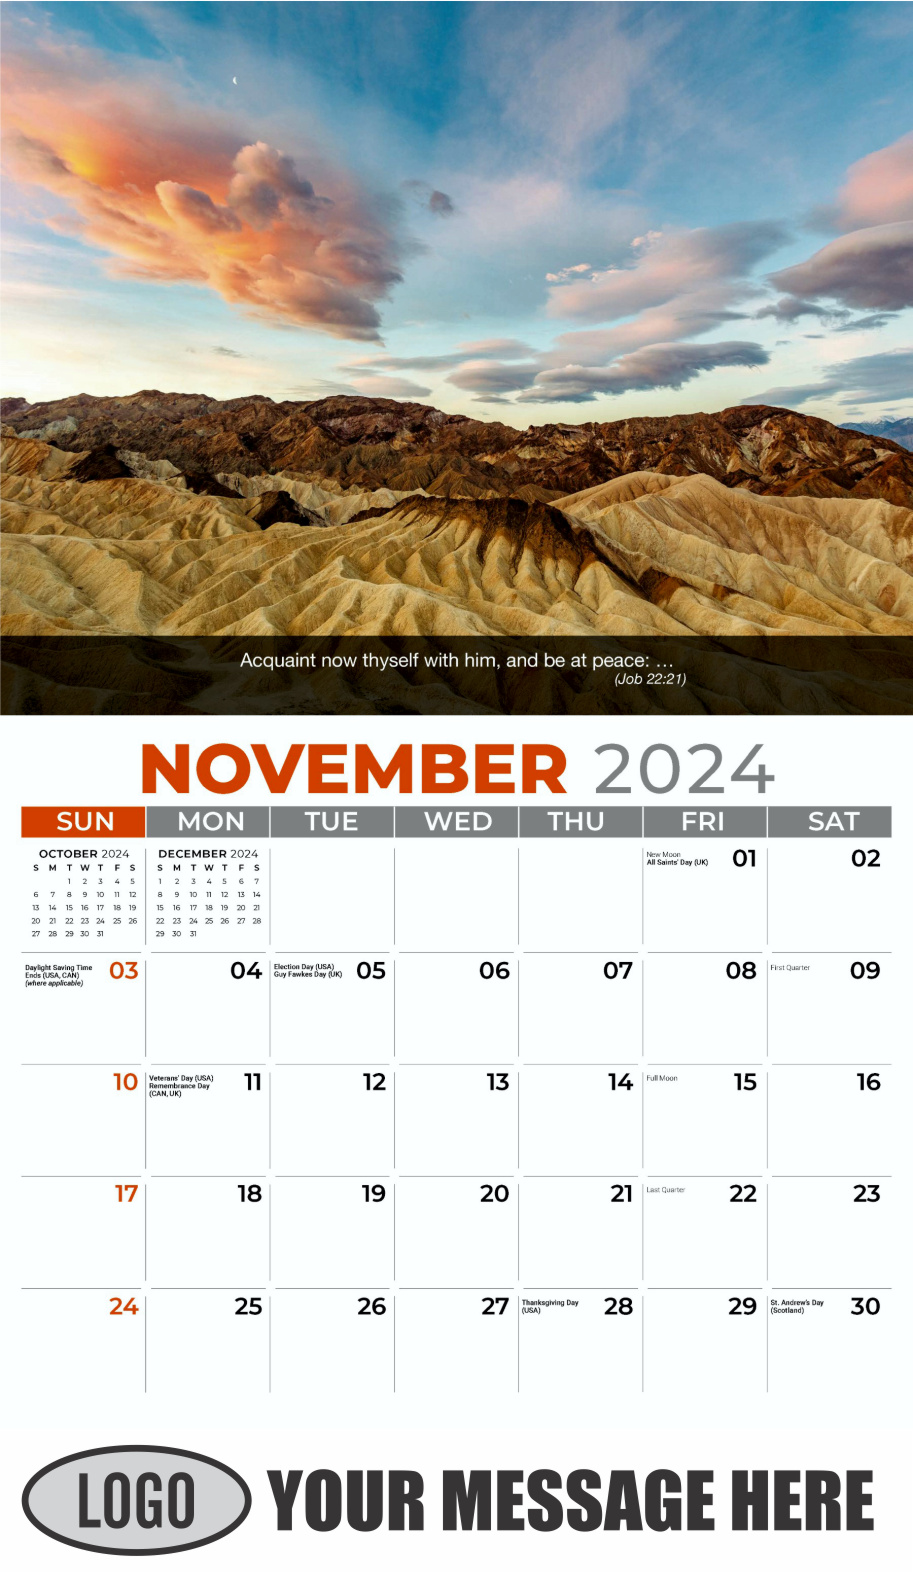 Faith Passages 2024 Christian Business Advertising Calendar - November